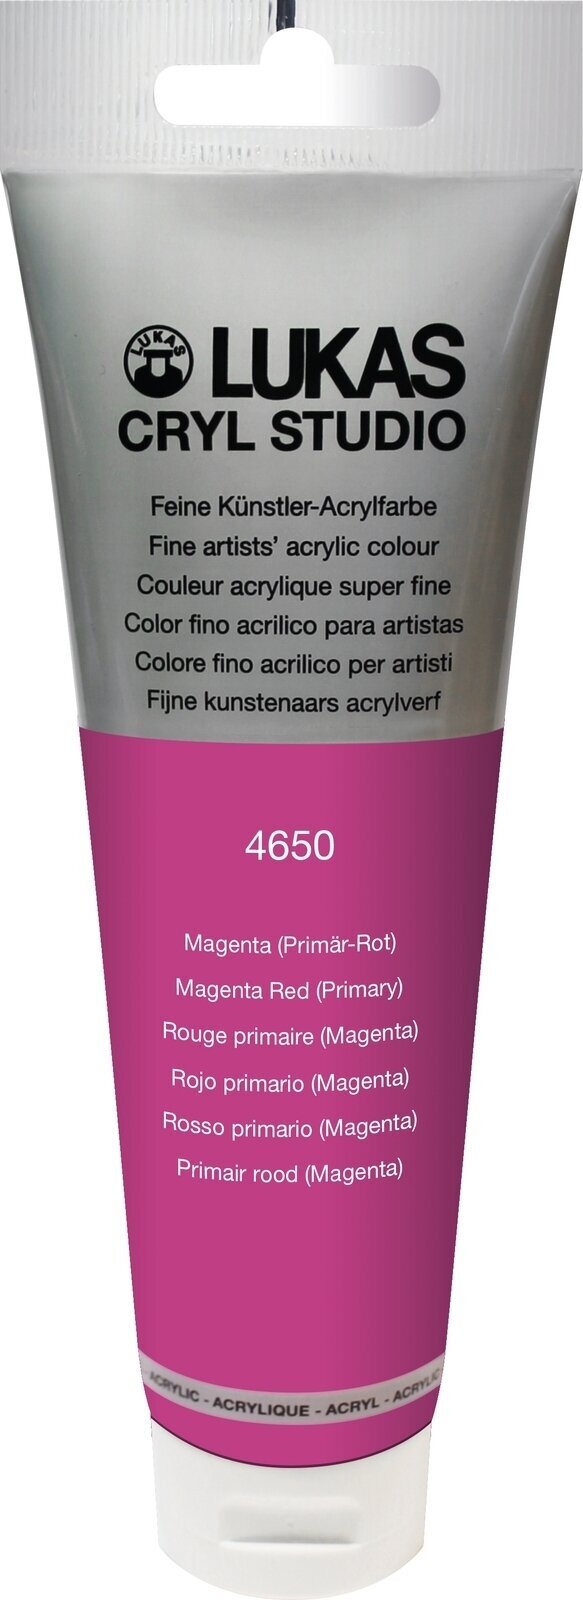 Akrylová barva Lukas Cryl Studio Acrylic Paint Plastic Tube Akrylová barva Magenta Red (Primary) 125 ml 1 ks